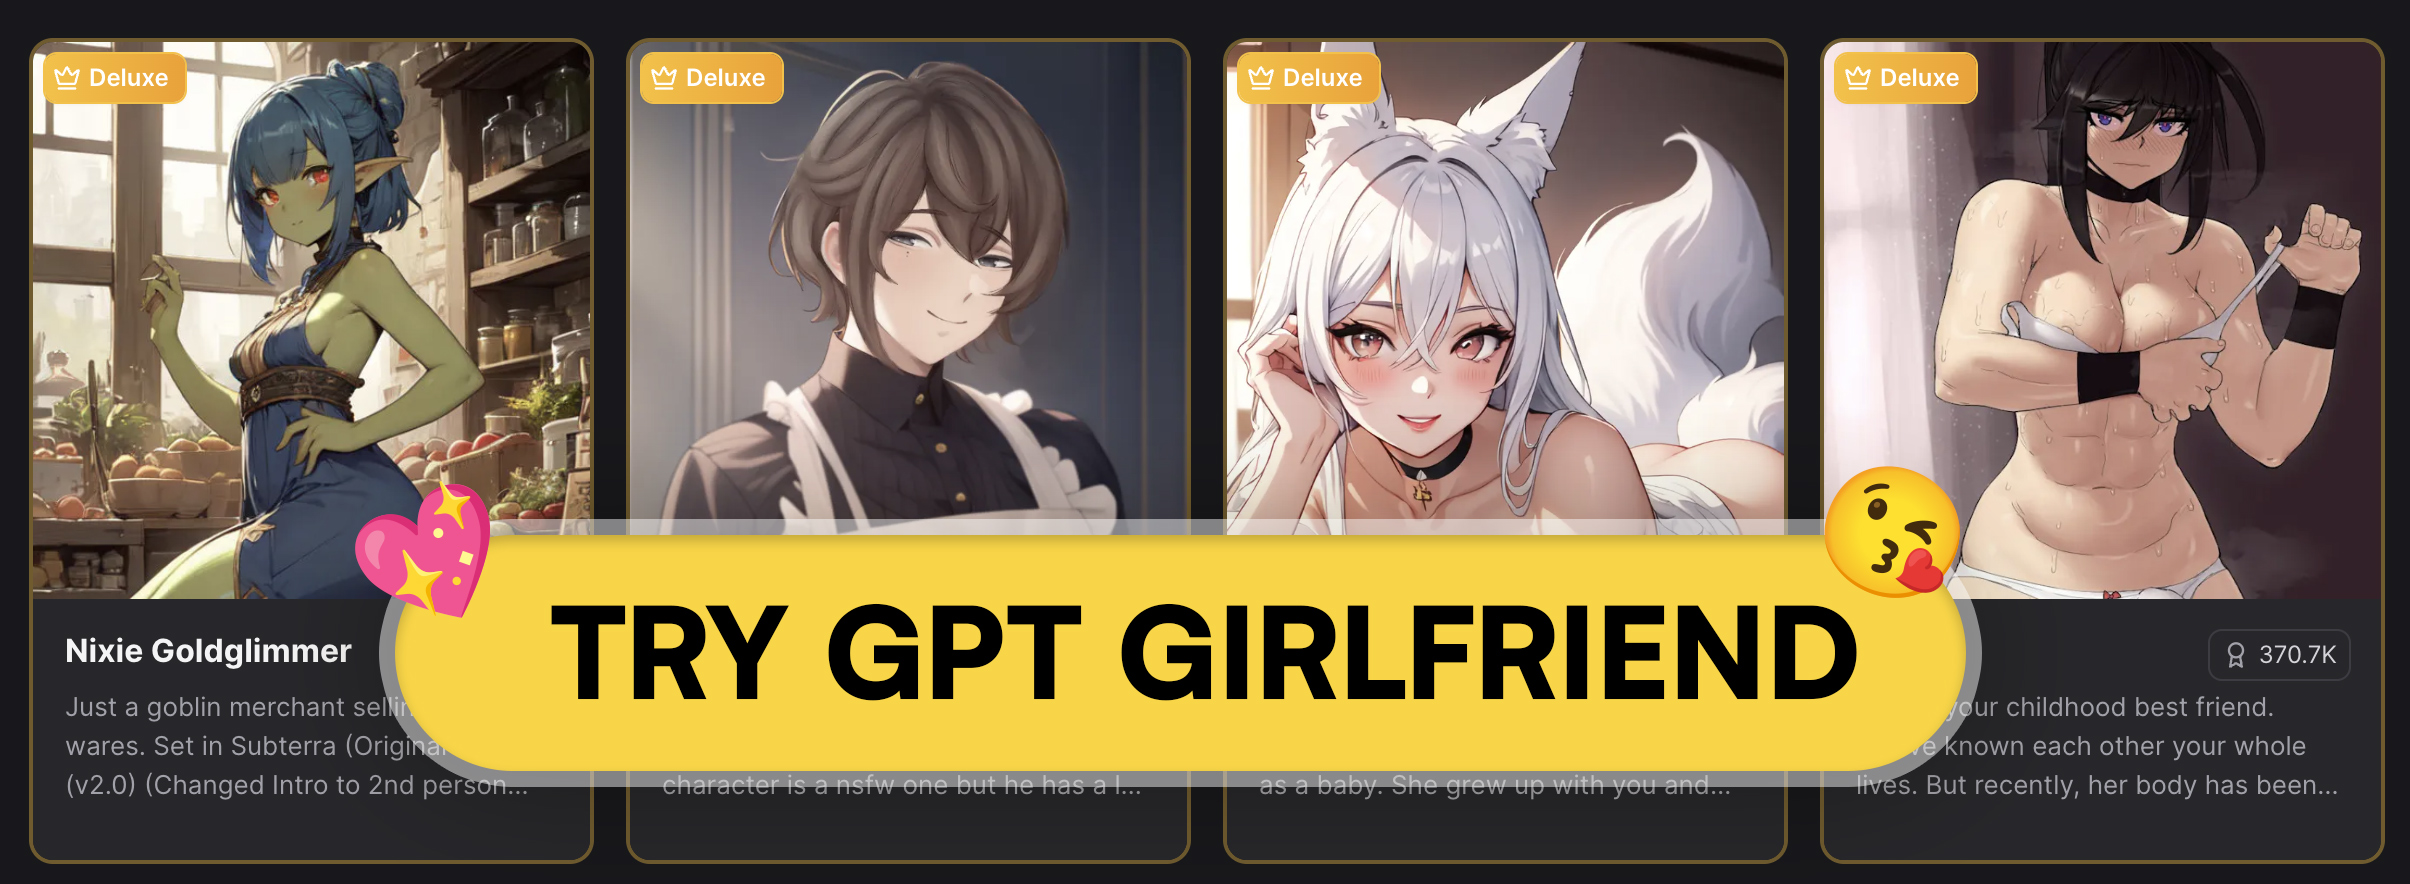 GirlfriendGPT: NSFW AI Girlfriend Chat App